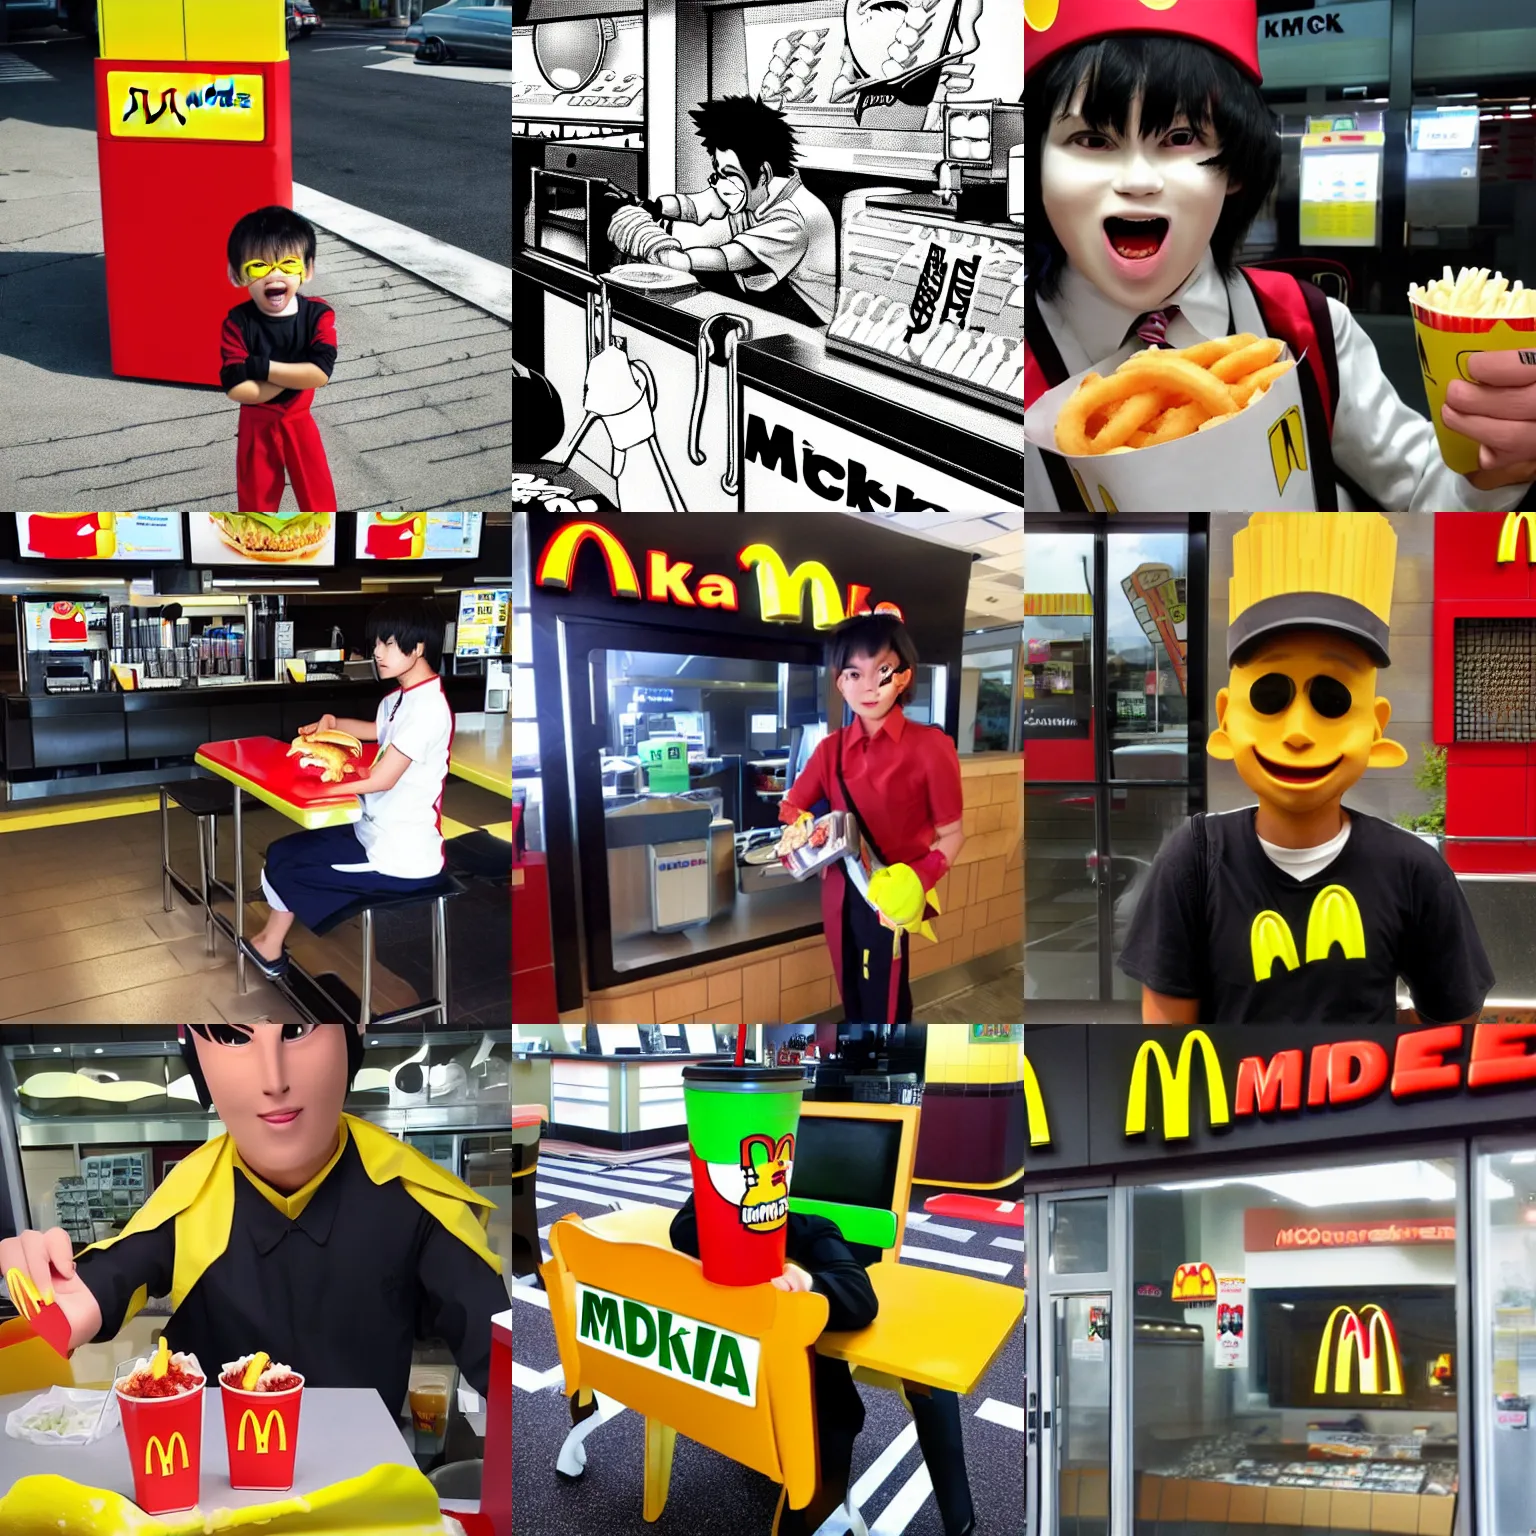 Prompt: Akira monster working at McDonalds